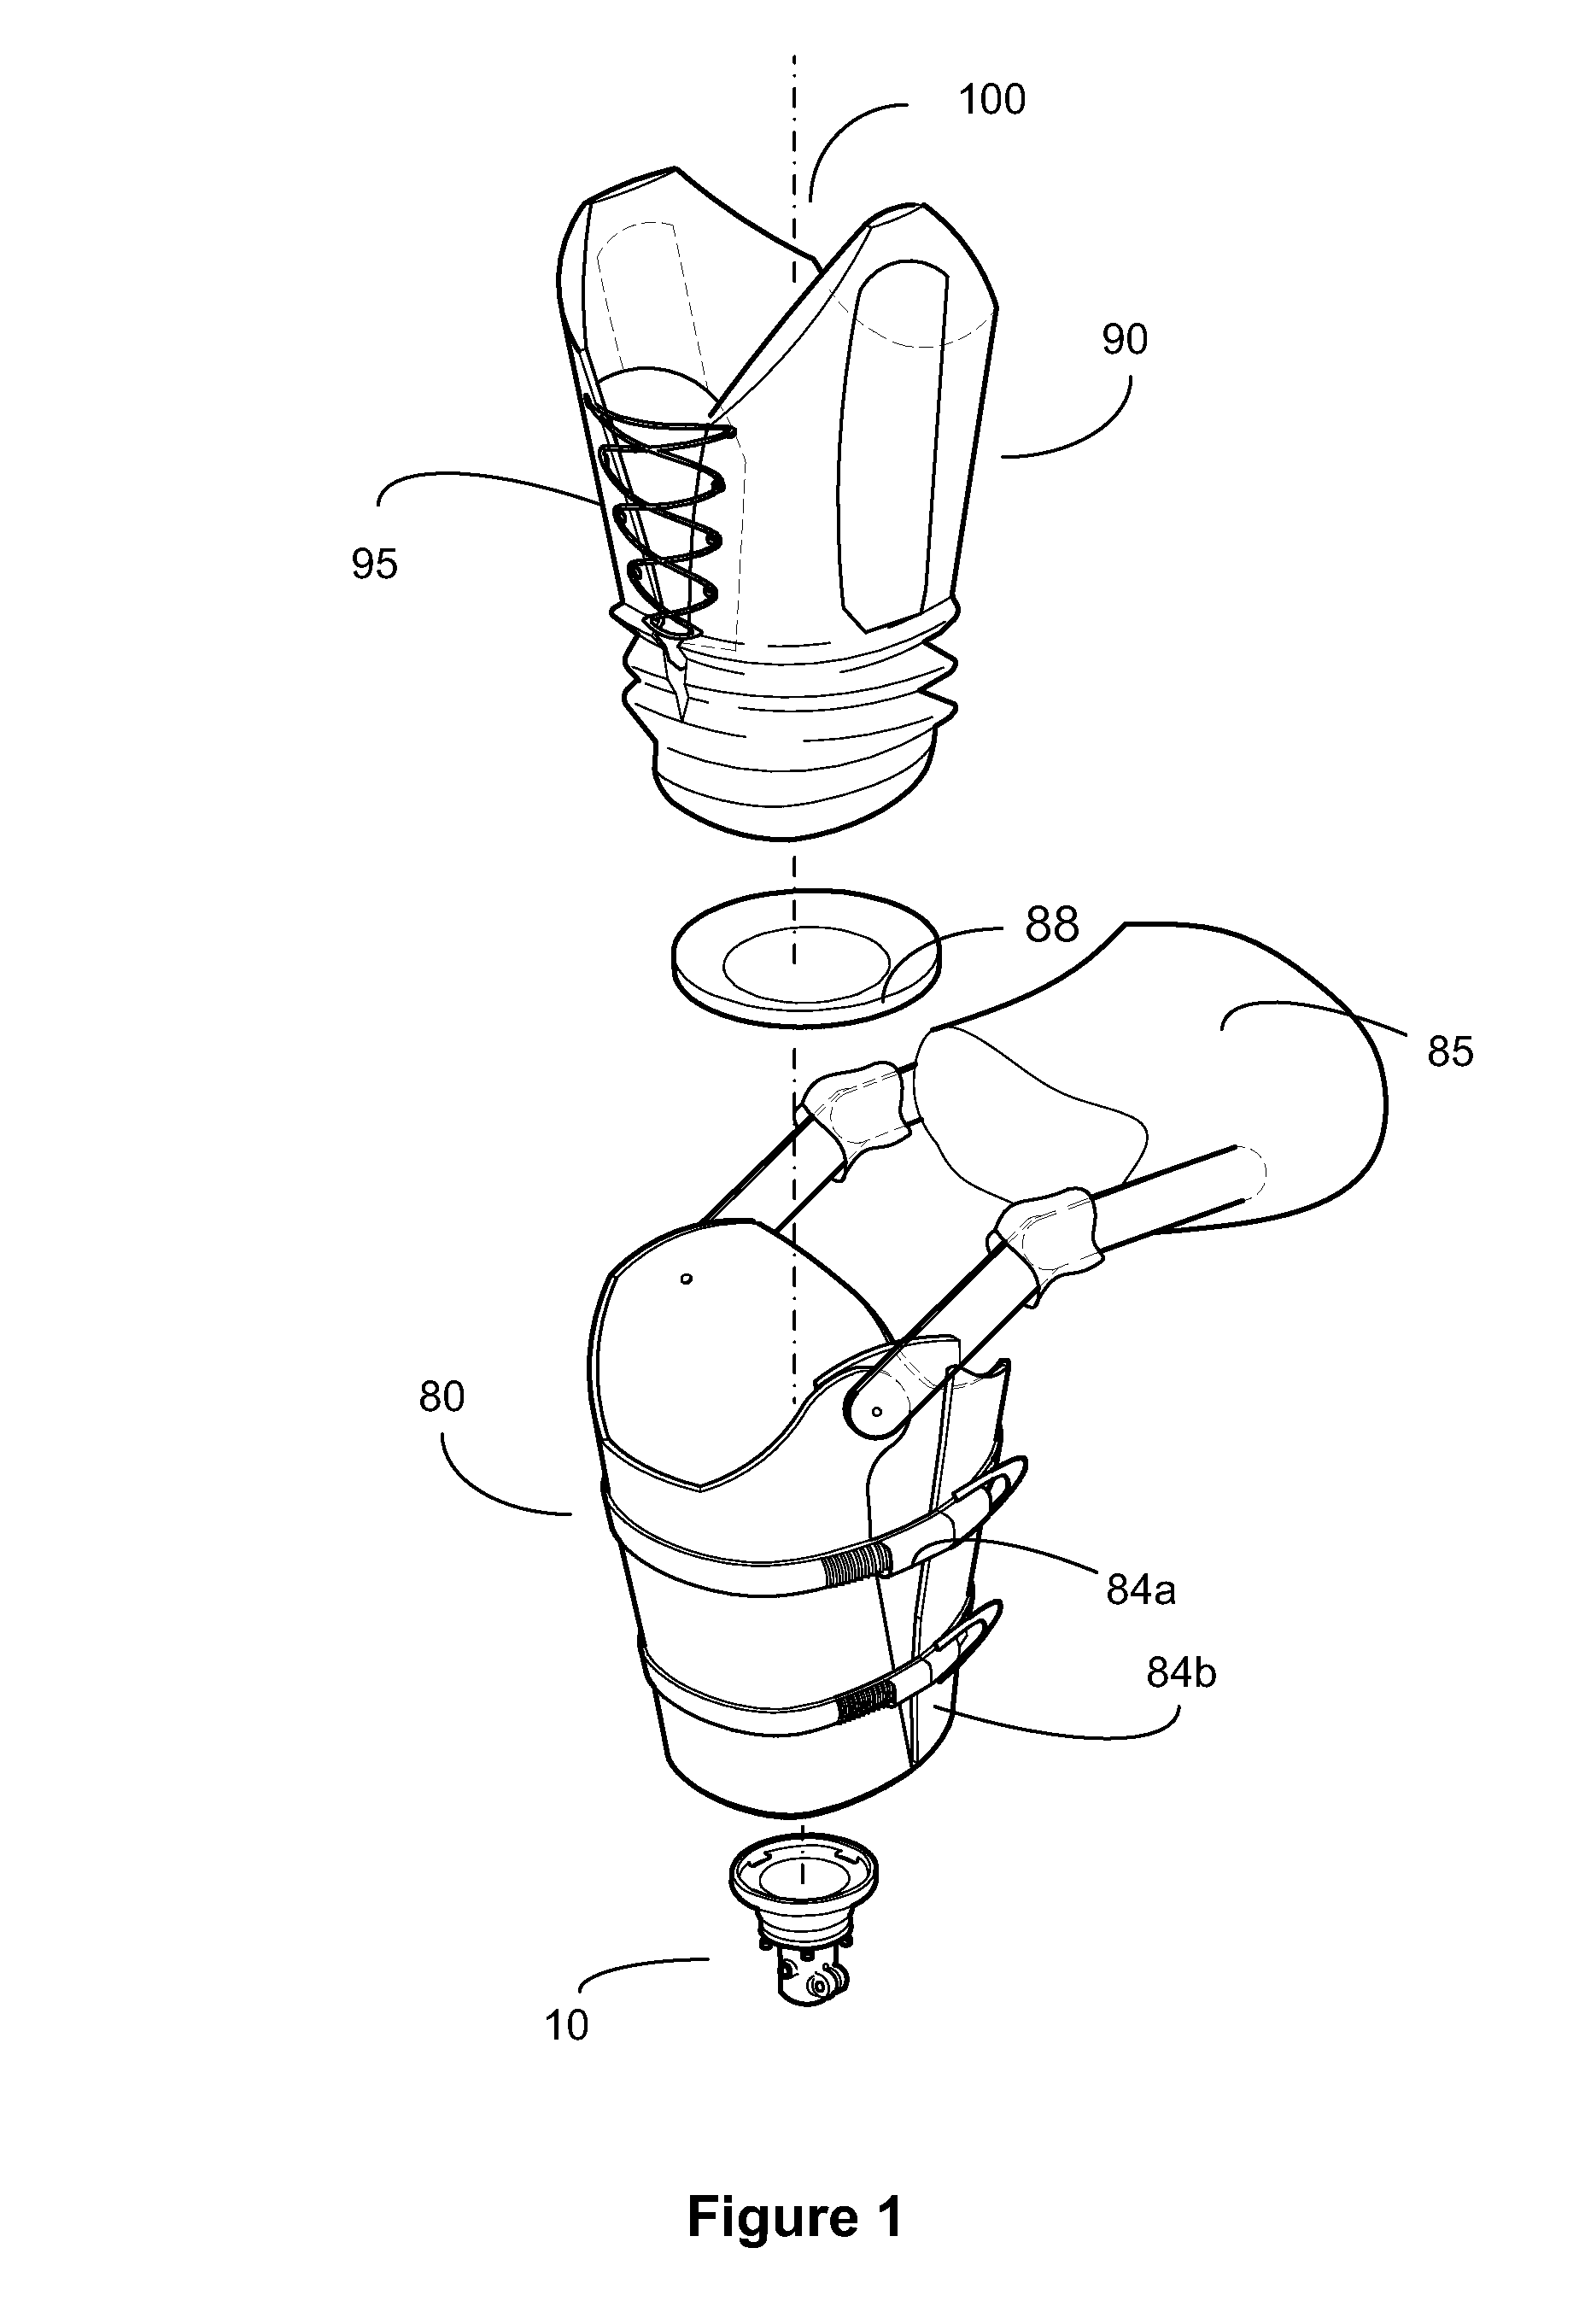 Modular prosthesis system